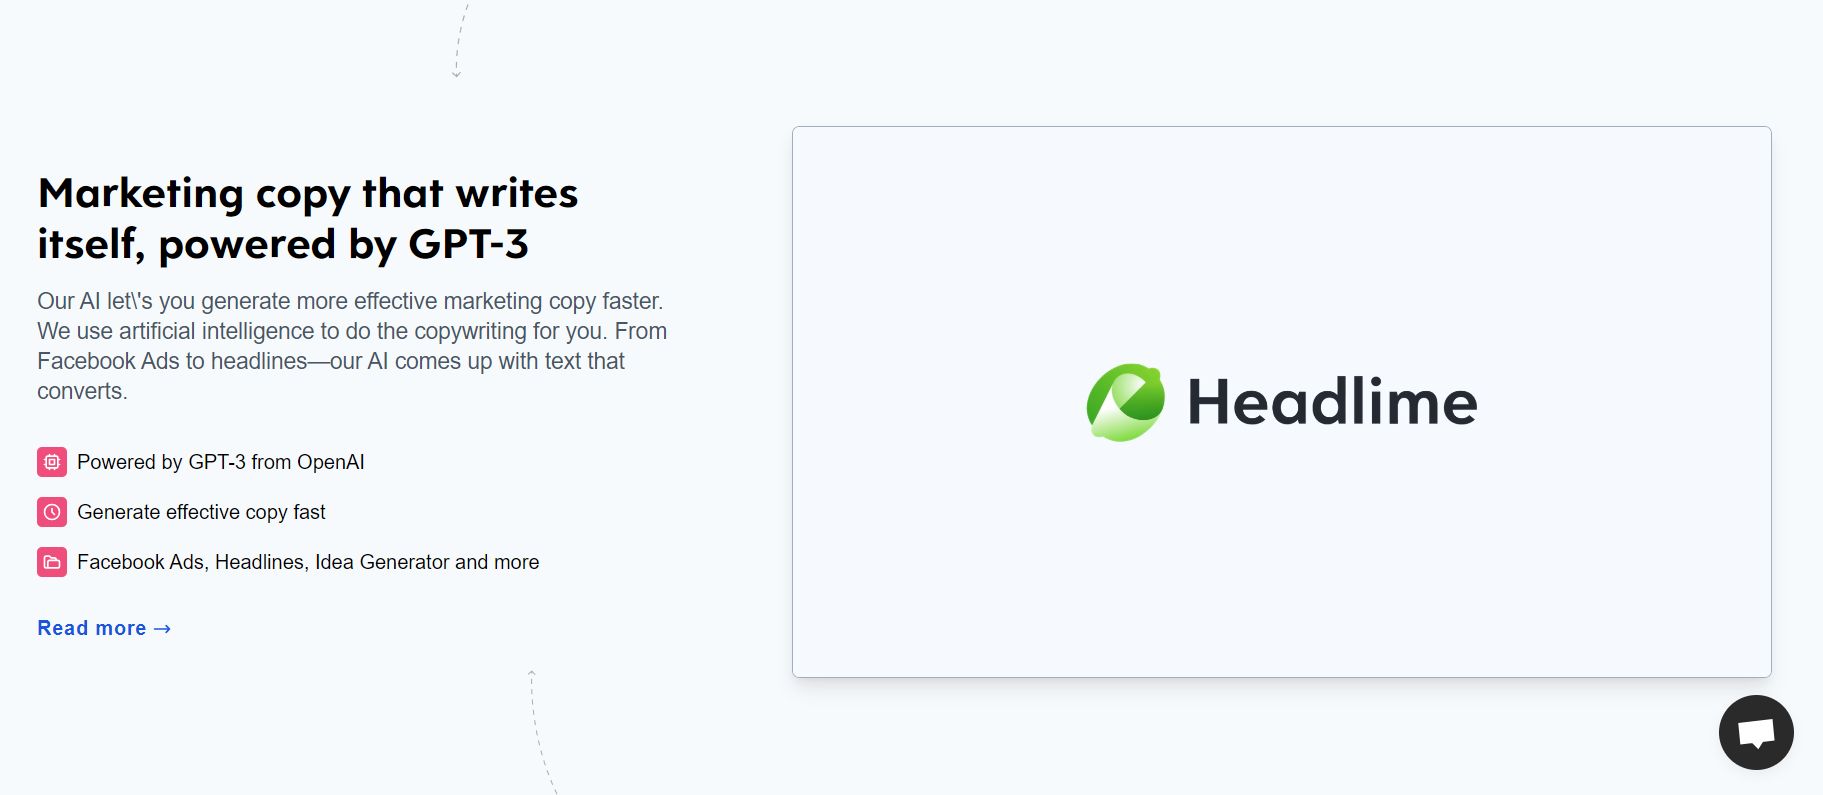 Headlime helps create marketing copy